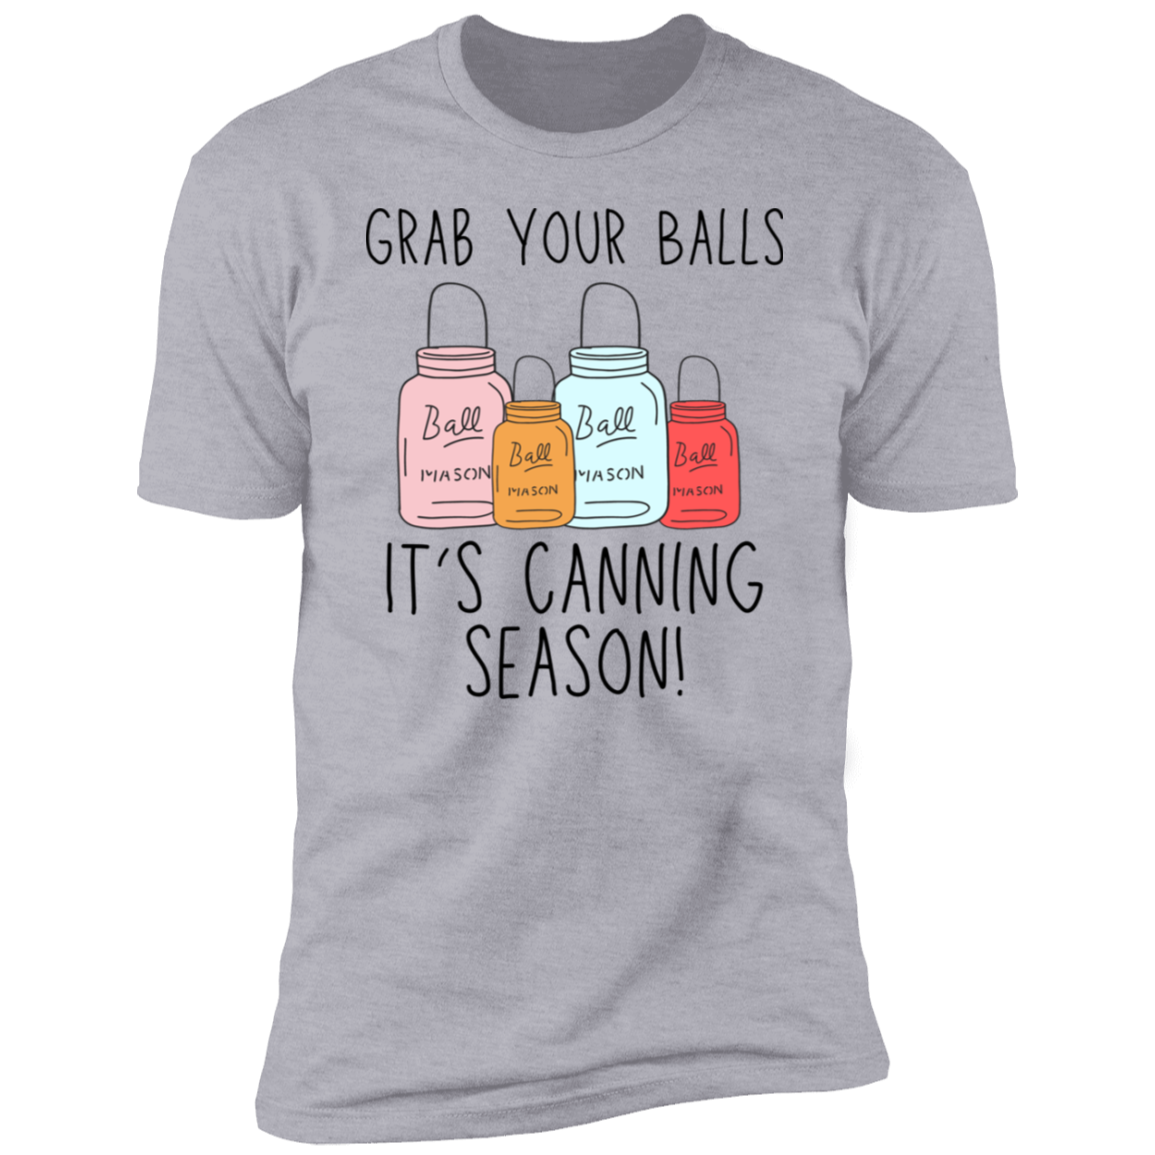 It’s canning season! Grab your Balls T-Shirt